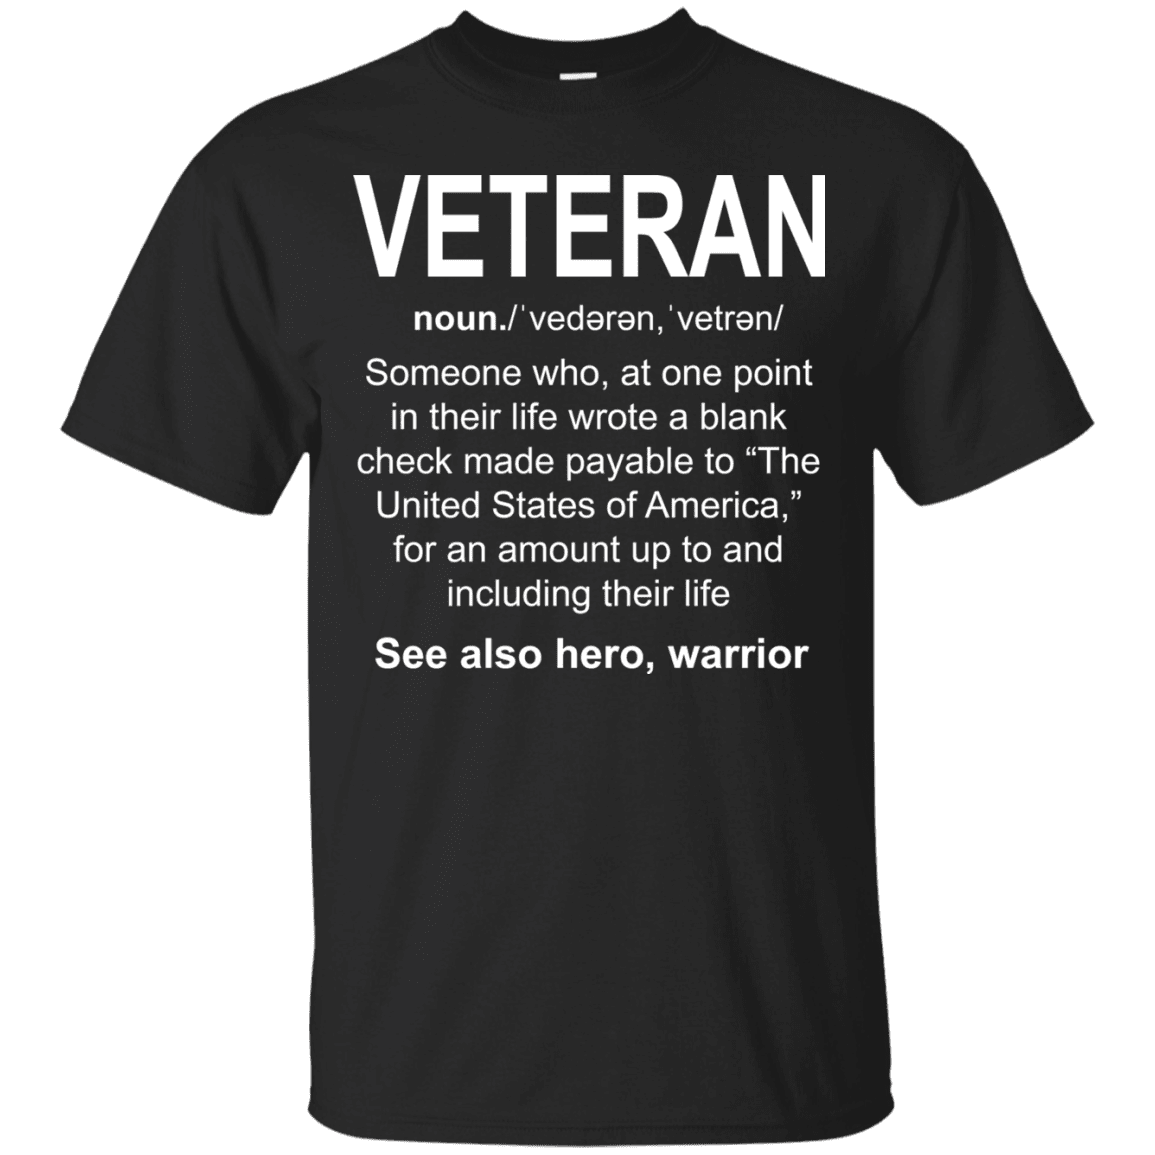 Military T-Shirt "Who Is A Veteran Men" Front-TShirt-General-Veterans Nation